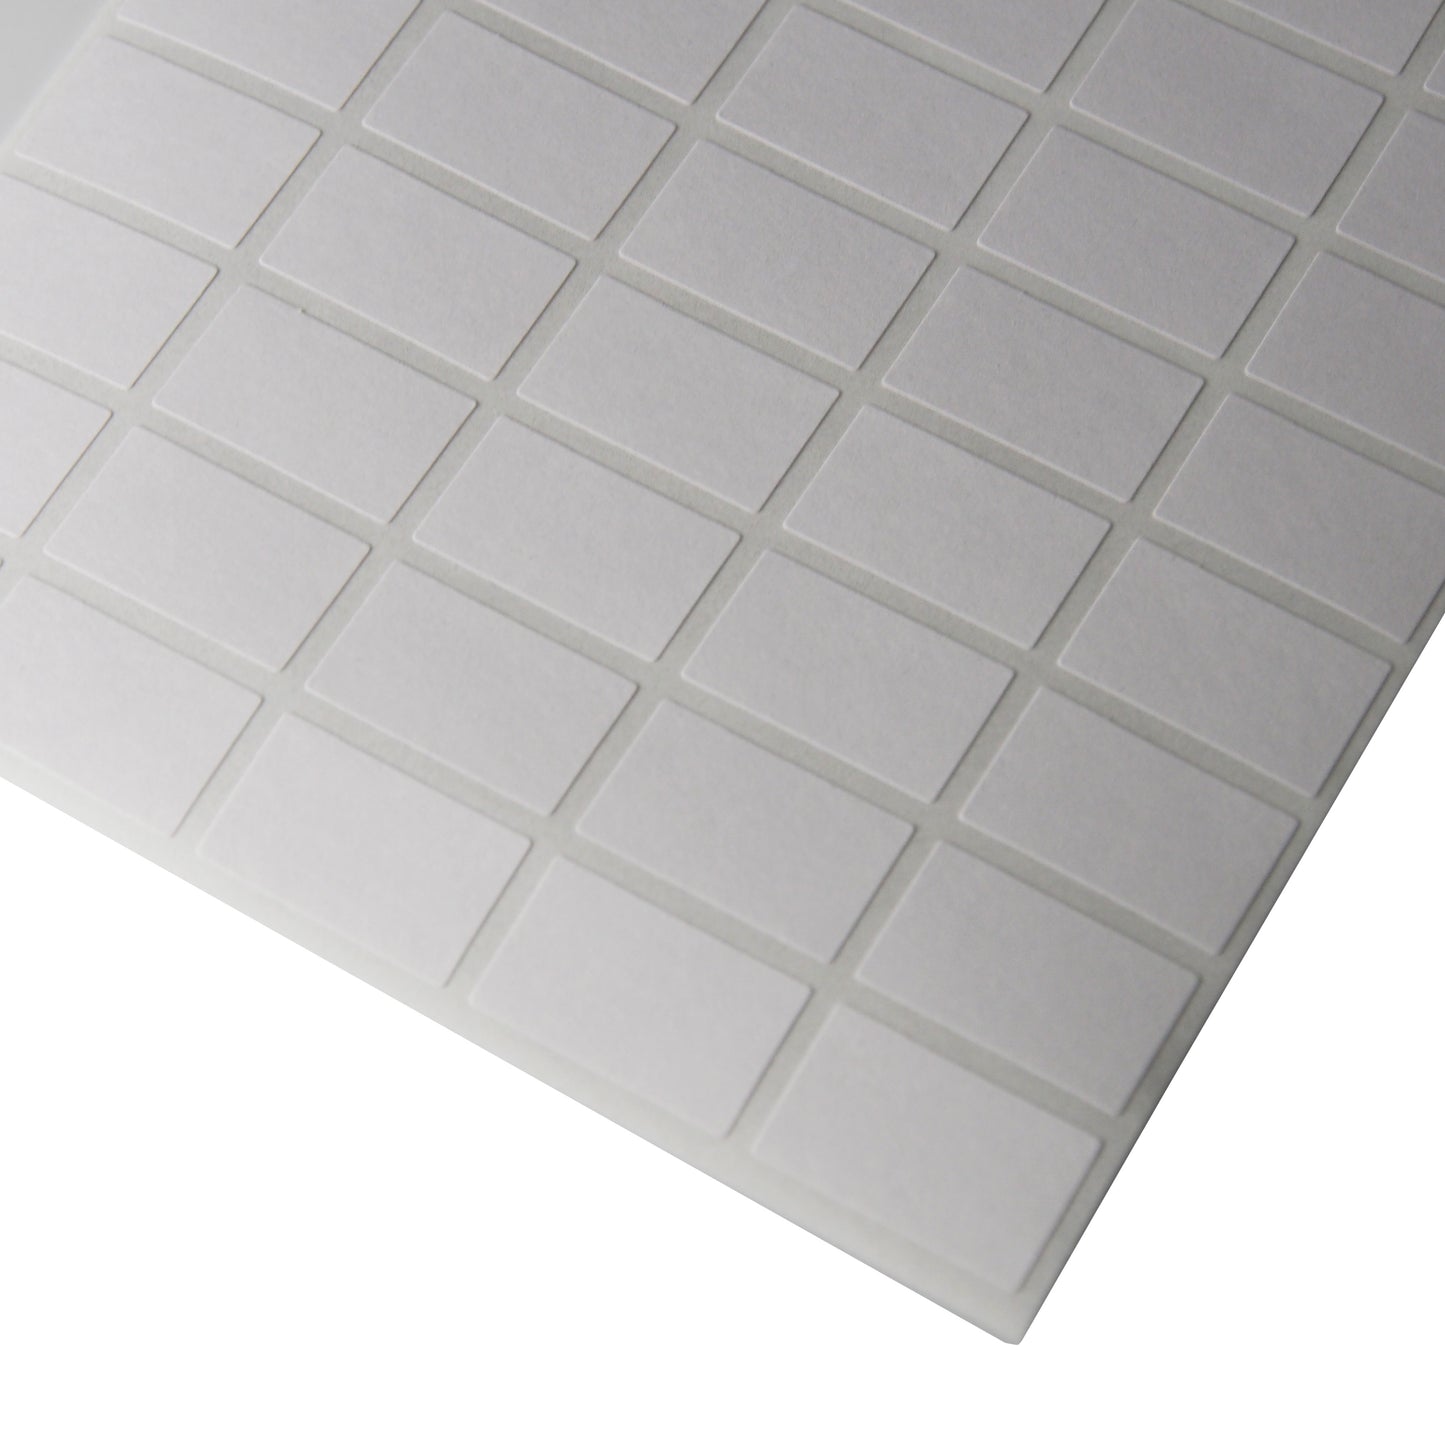 Corner of a sheet of Rectangular Self Adhesive Plain Labels - 1080 Labels (3/8" x 5/8")